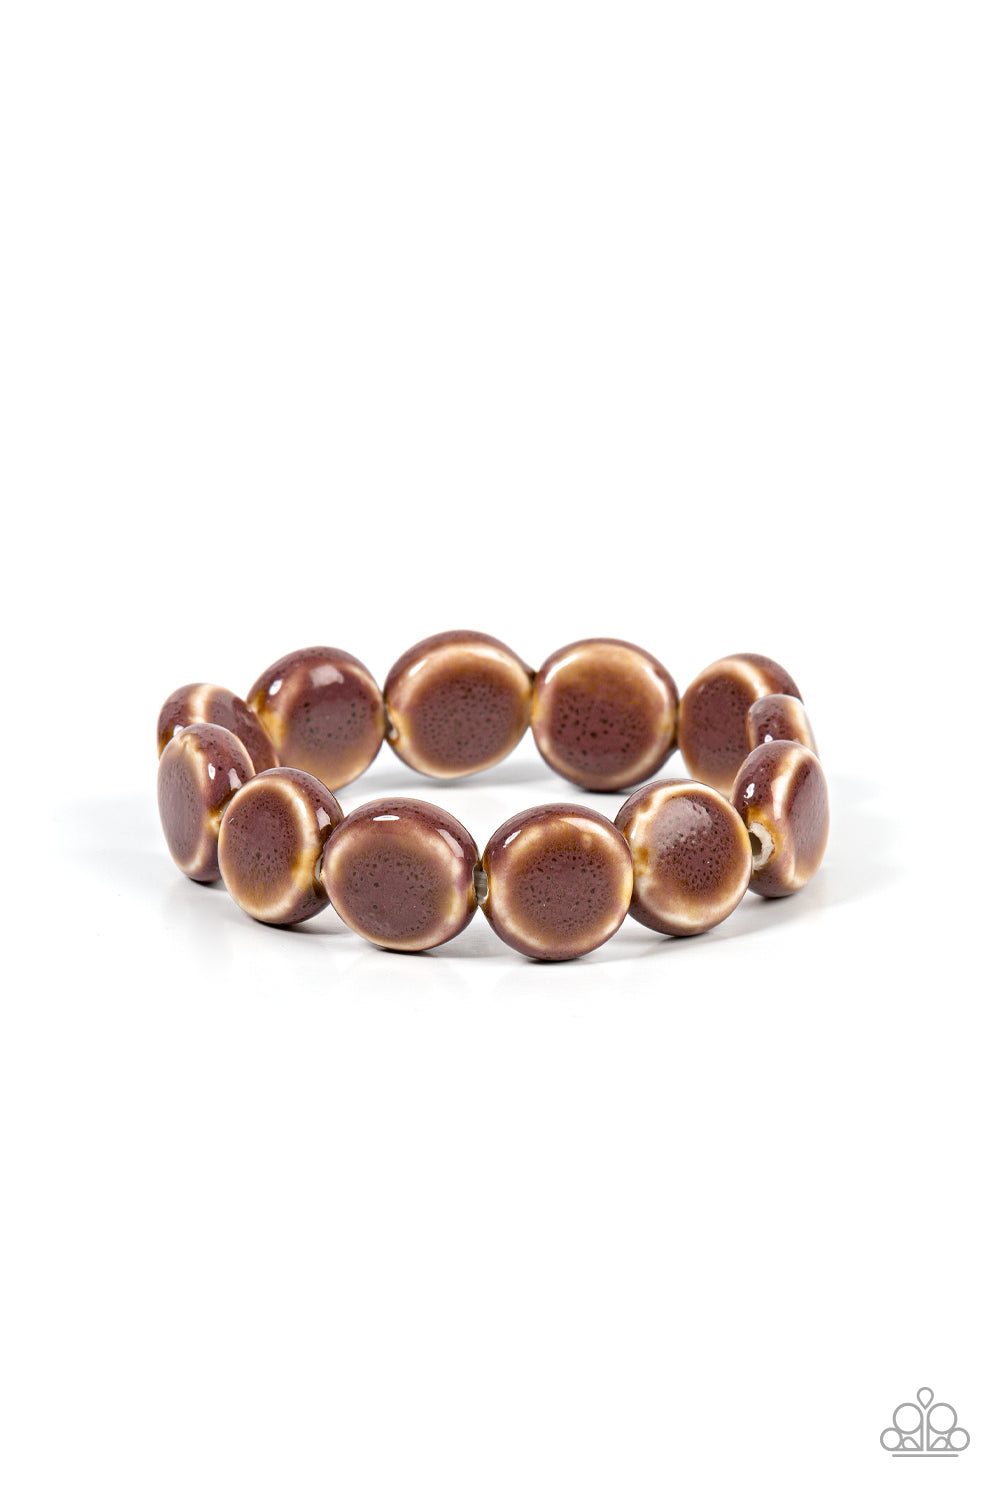 Earthy Entrada - brown - Paparazzi bracelet